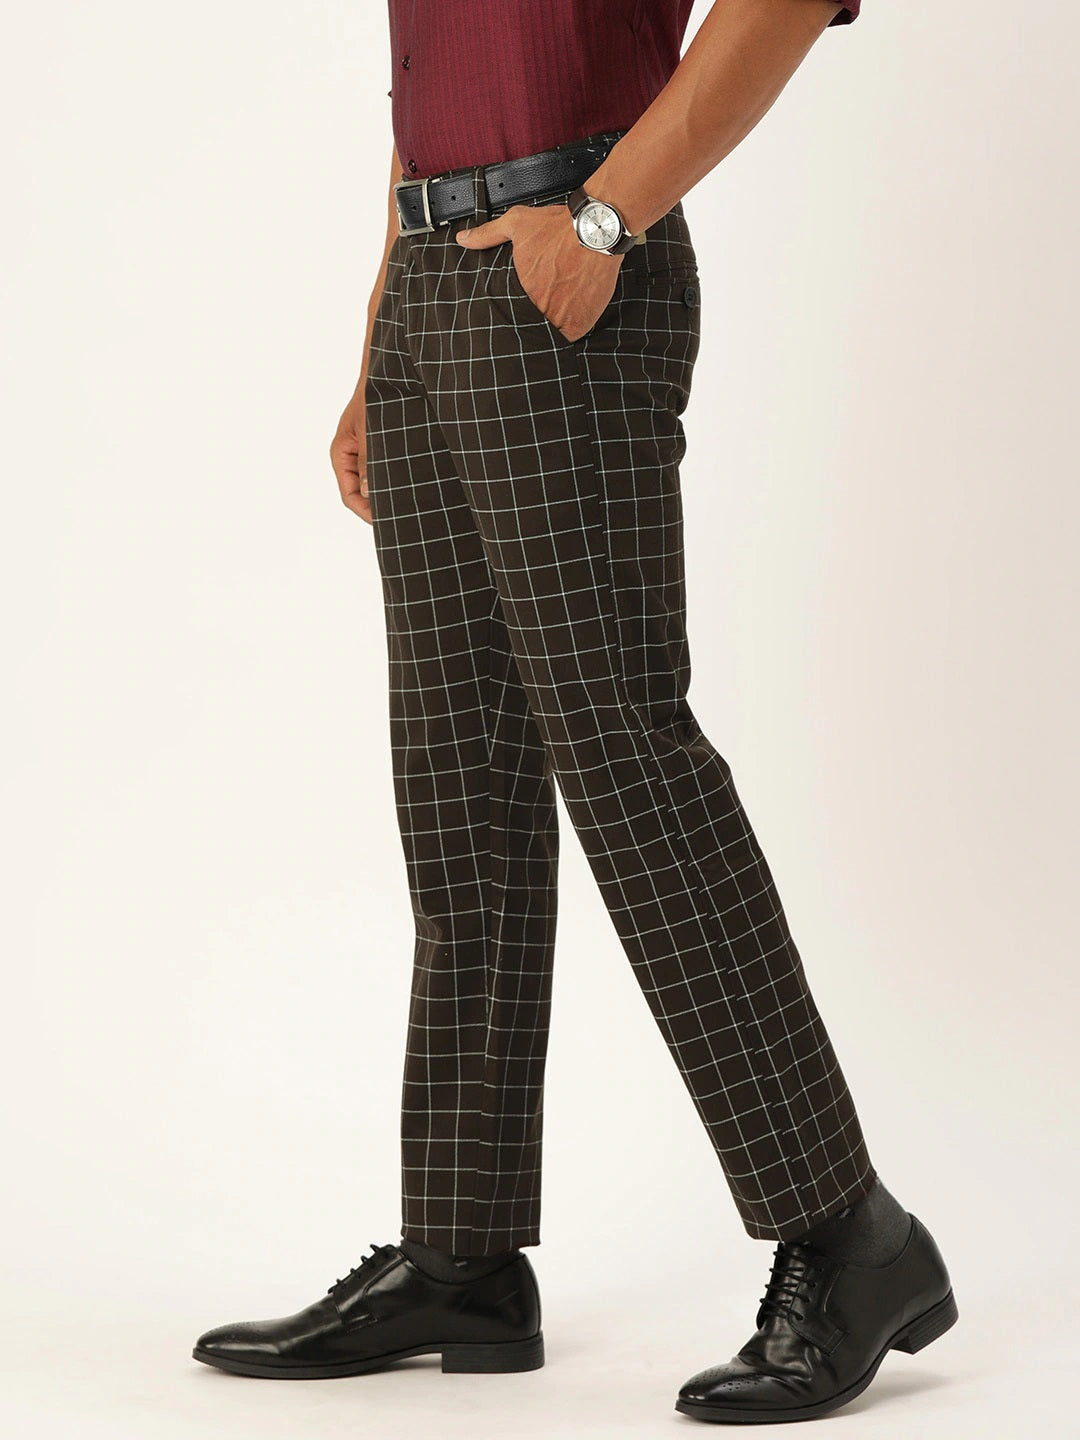 Men Check Pants Formal Dress Slim Fit Casual Business Work Taperd Trousers  Blue | eBay